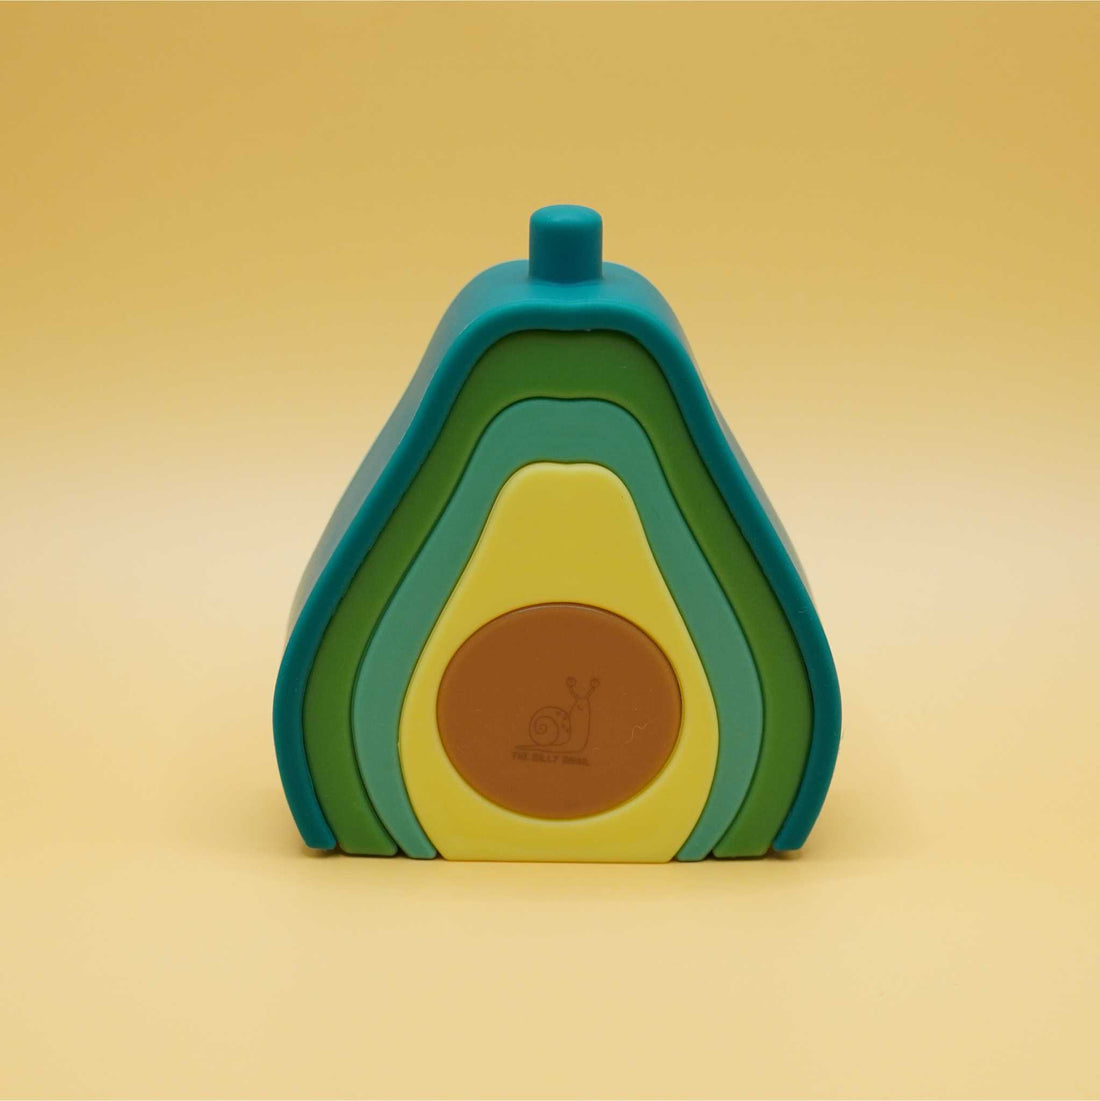 avocado adventure avocado shaped silicone stacking toy called